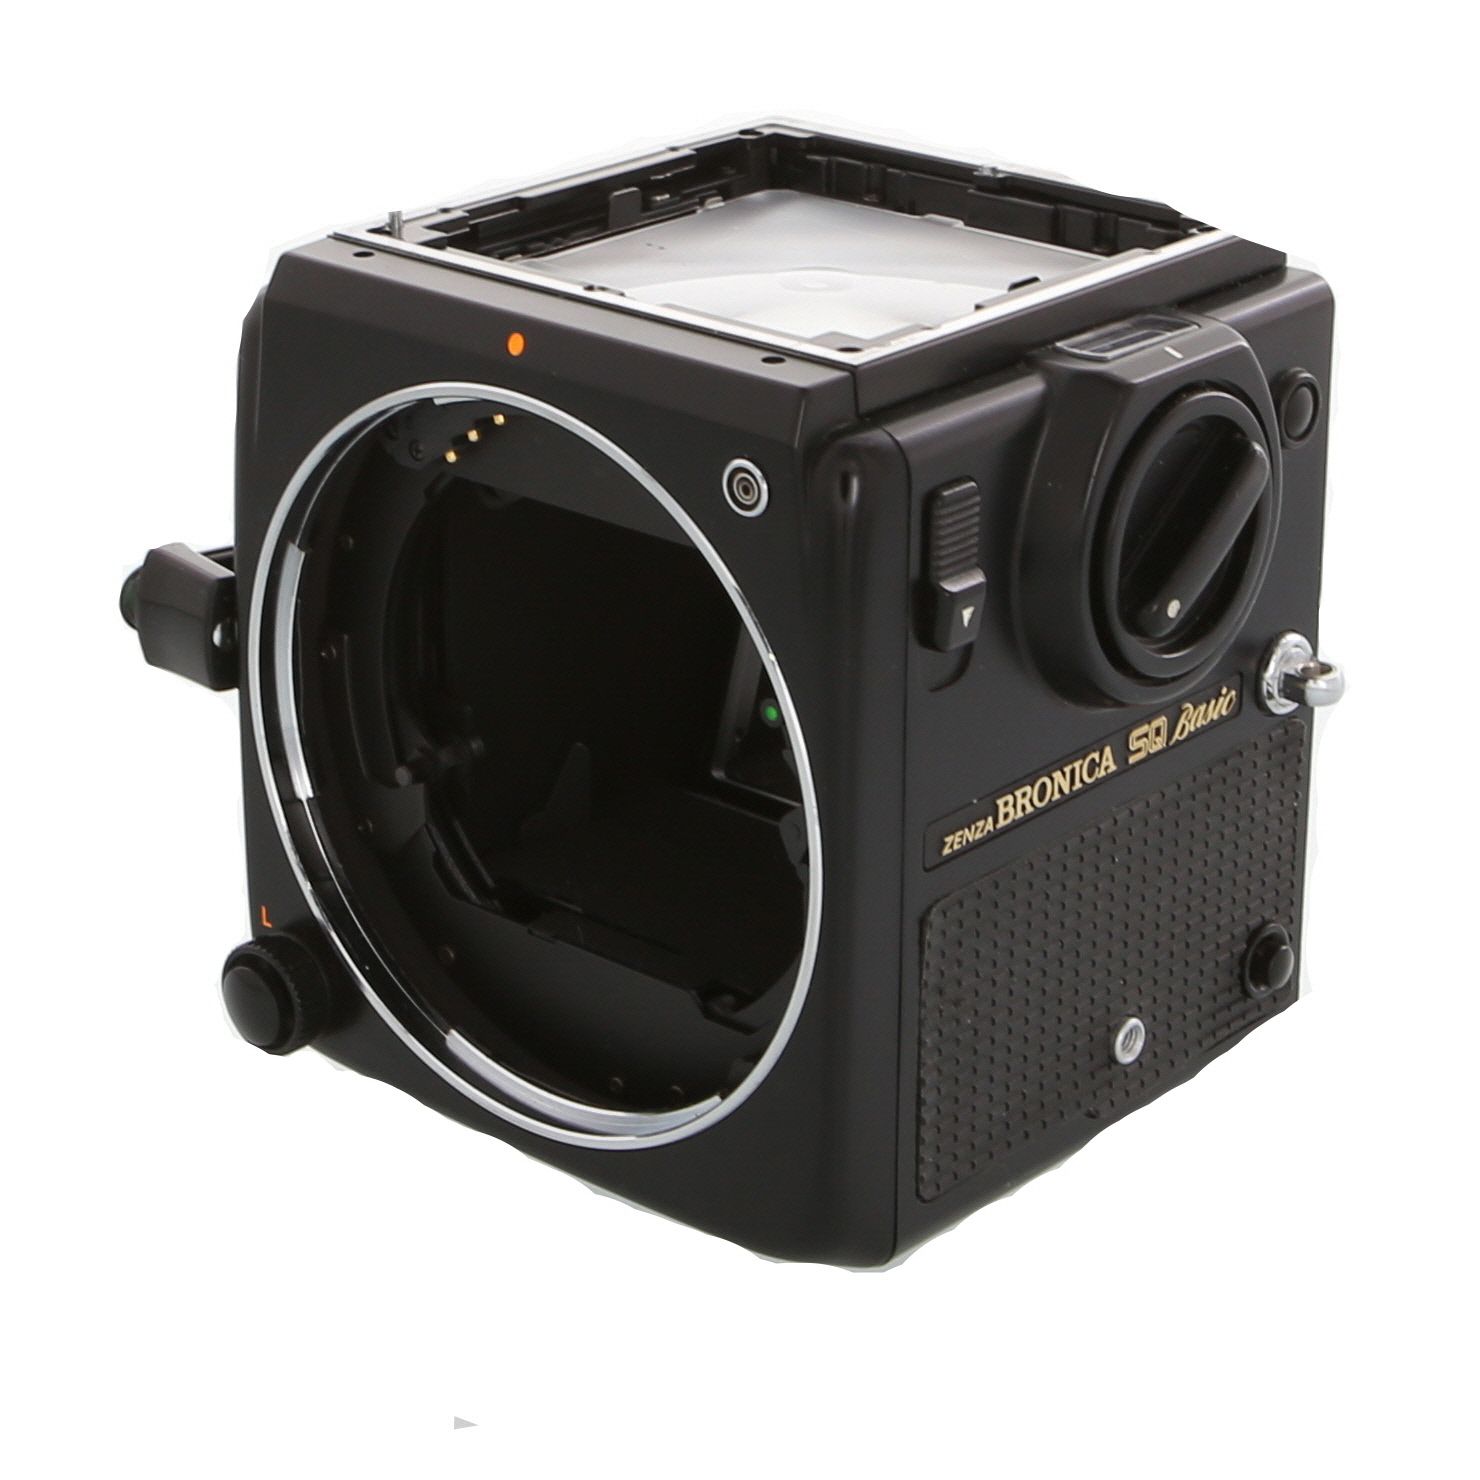 Topcon 105mm f/4.5 Super Topcor Seiko-SLV B 2X3 Lens at KEH Camera